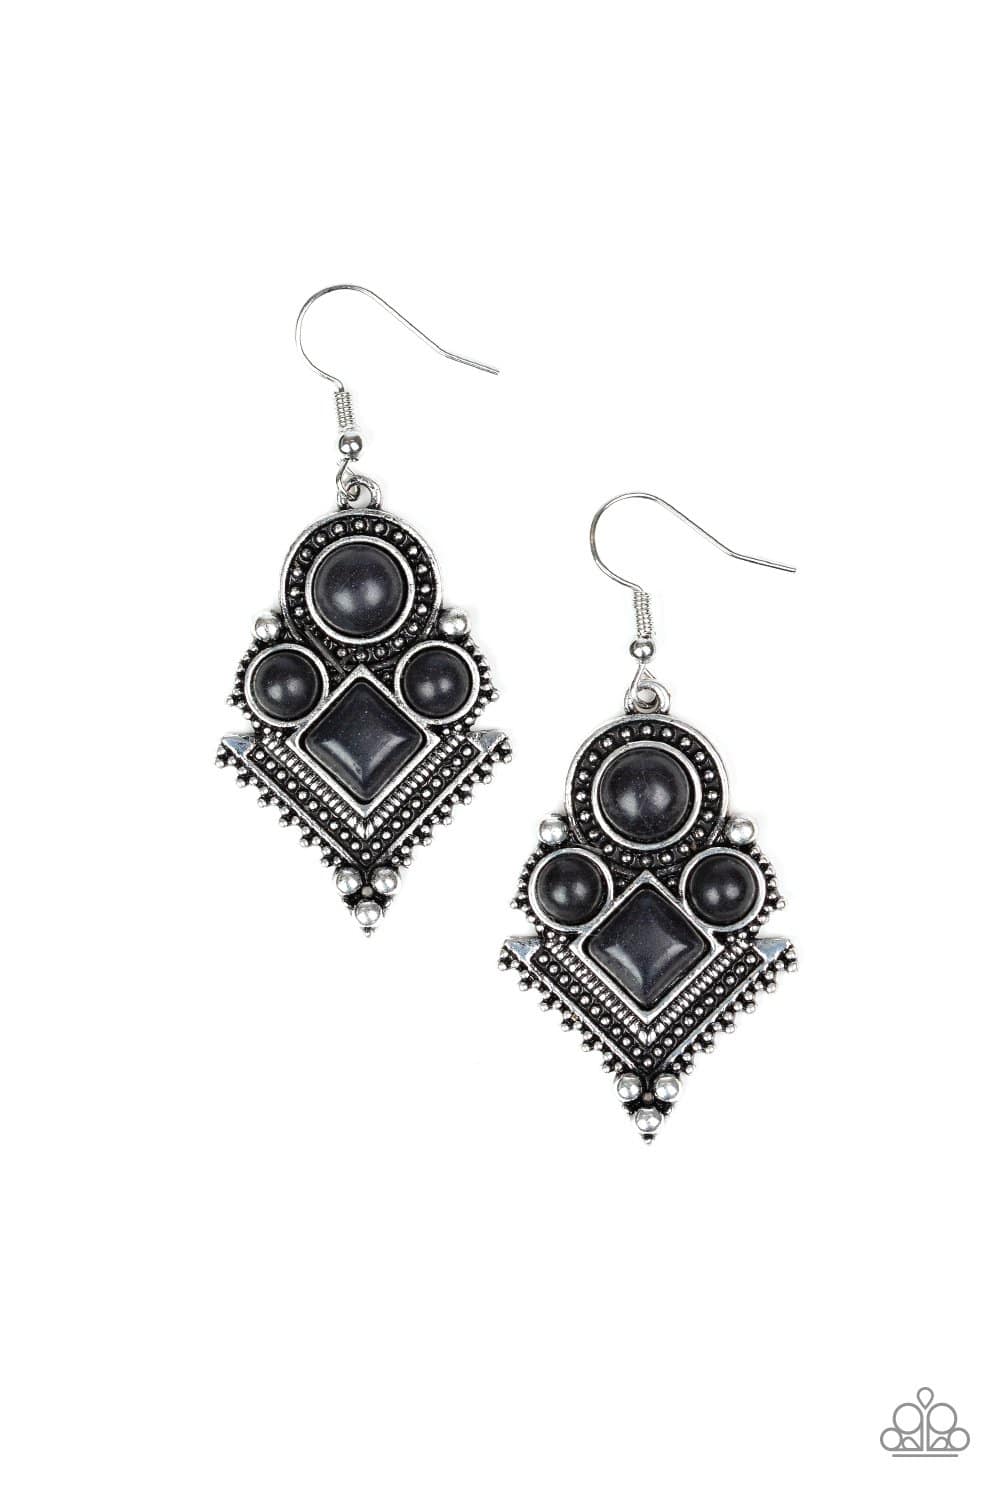 So Sonoran - Black Earrings - Paparazzi Accessories - GlaMarous Titi Jewels